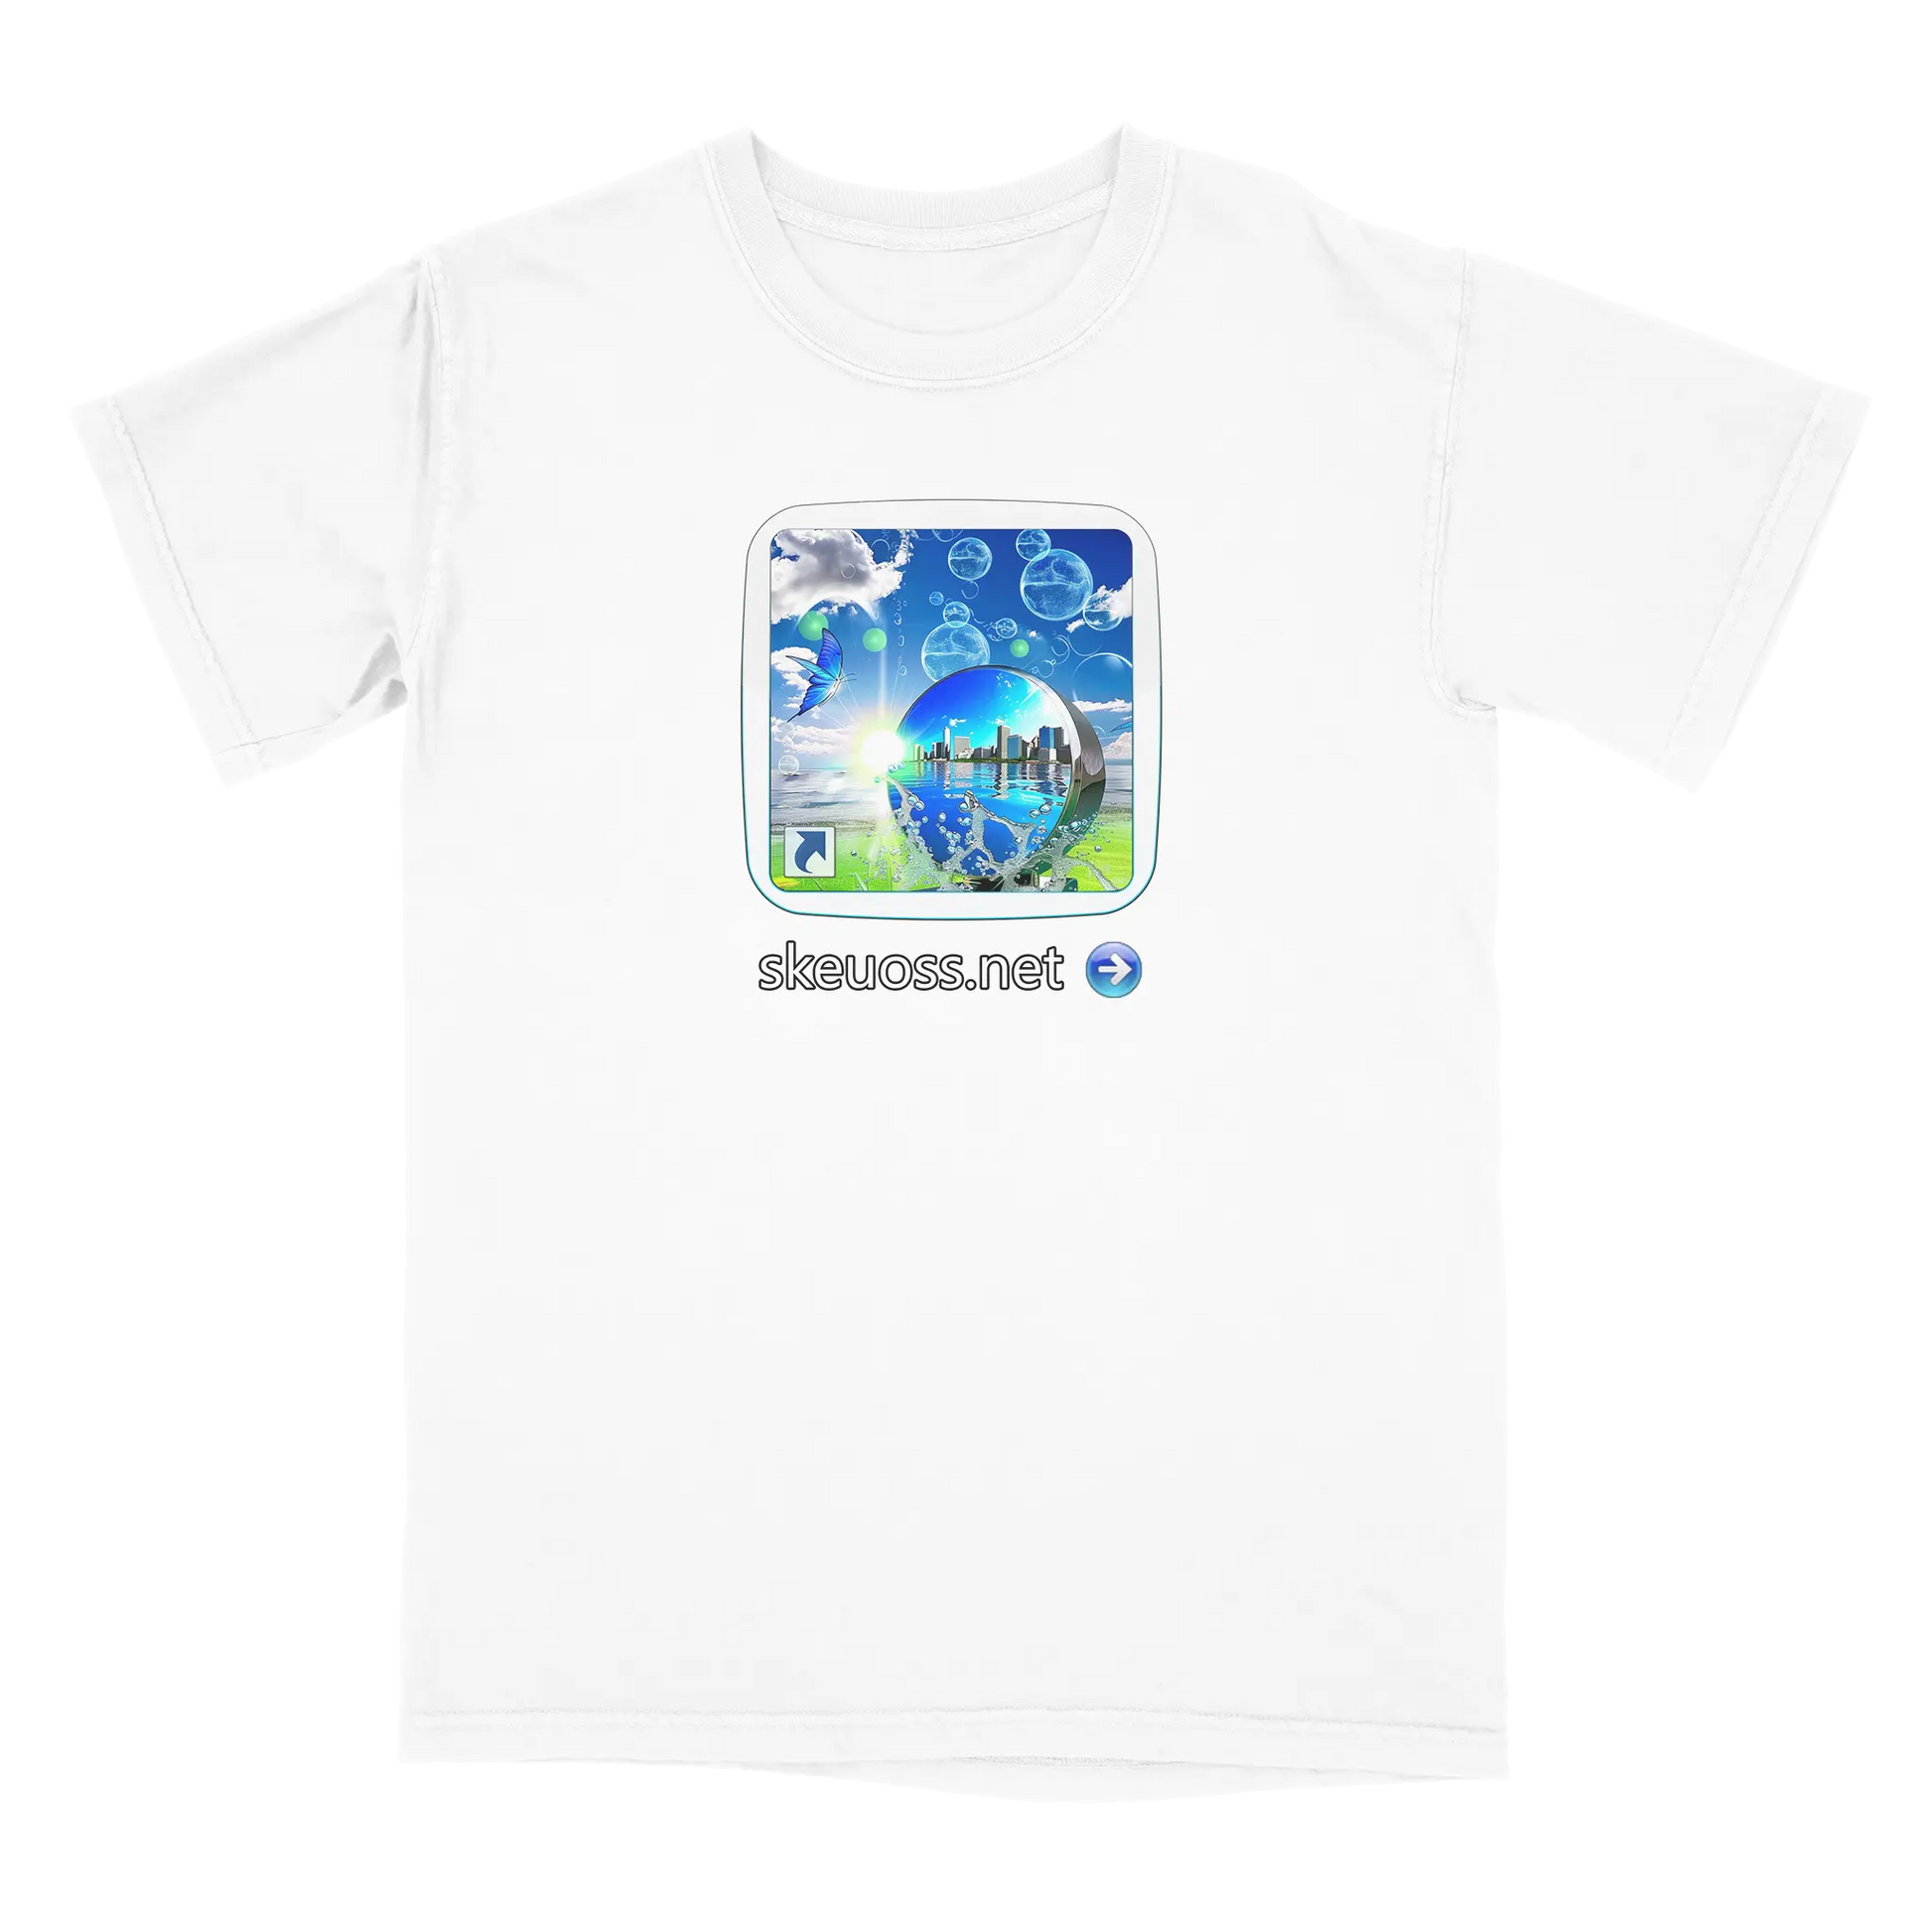 Frutiger Aero T-shirt - User Login Collection - User 396